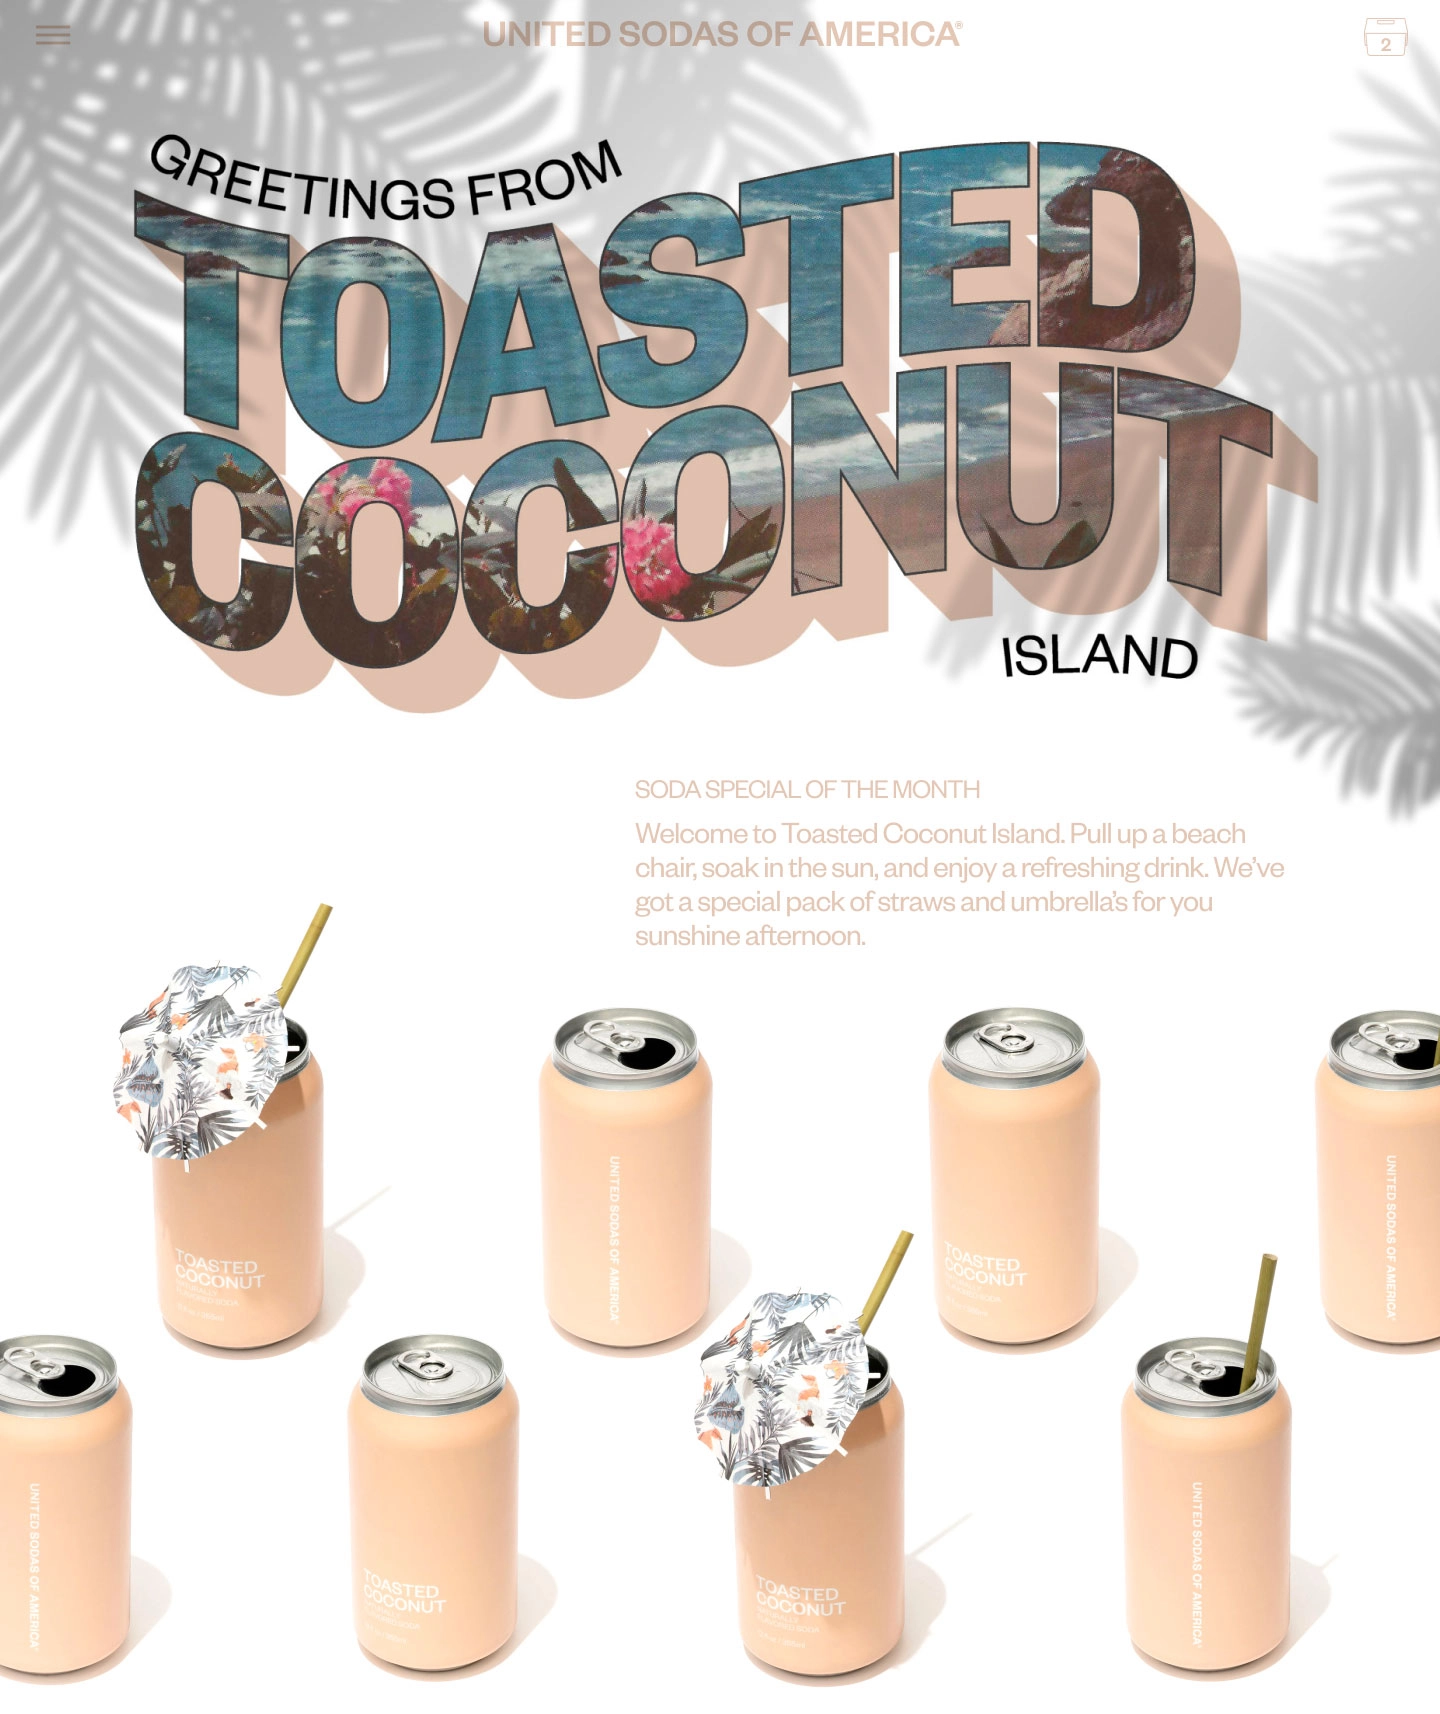 United Sodas Toasted Coconut Island